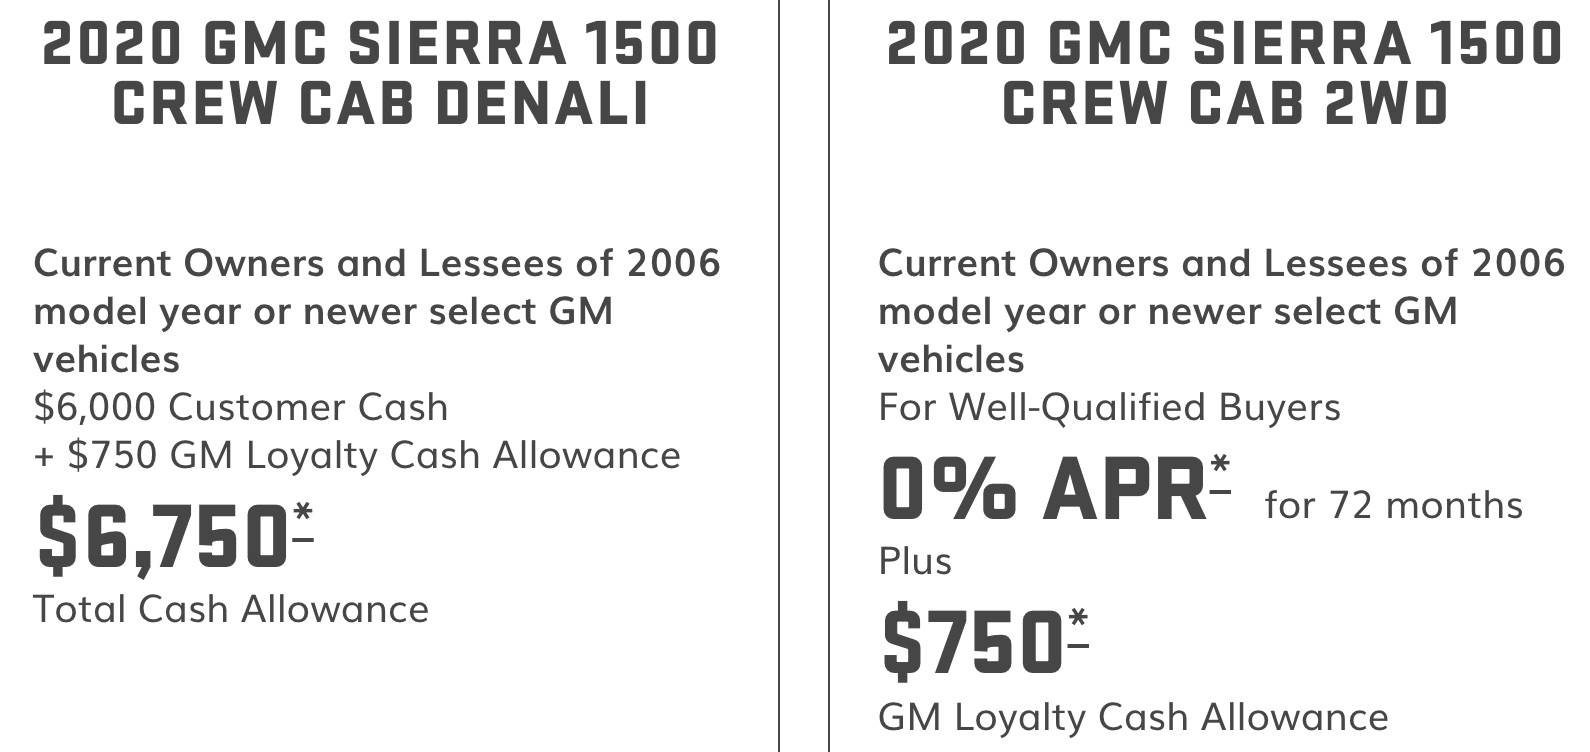 gmc-sierra-1500-rebate-totals-9-000-in-january-2020-gm-authority